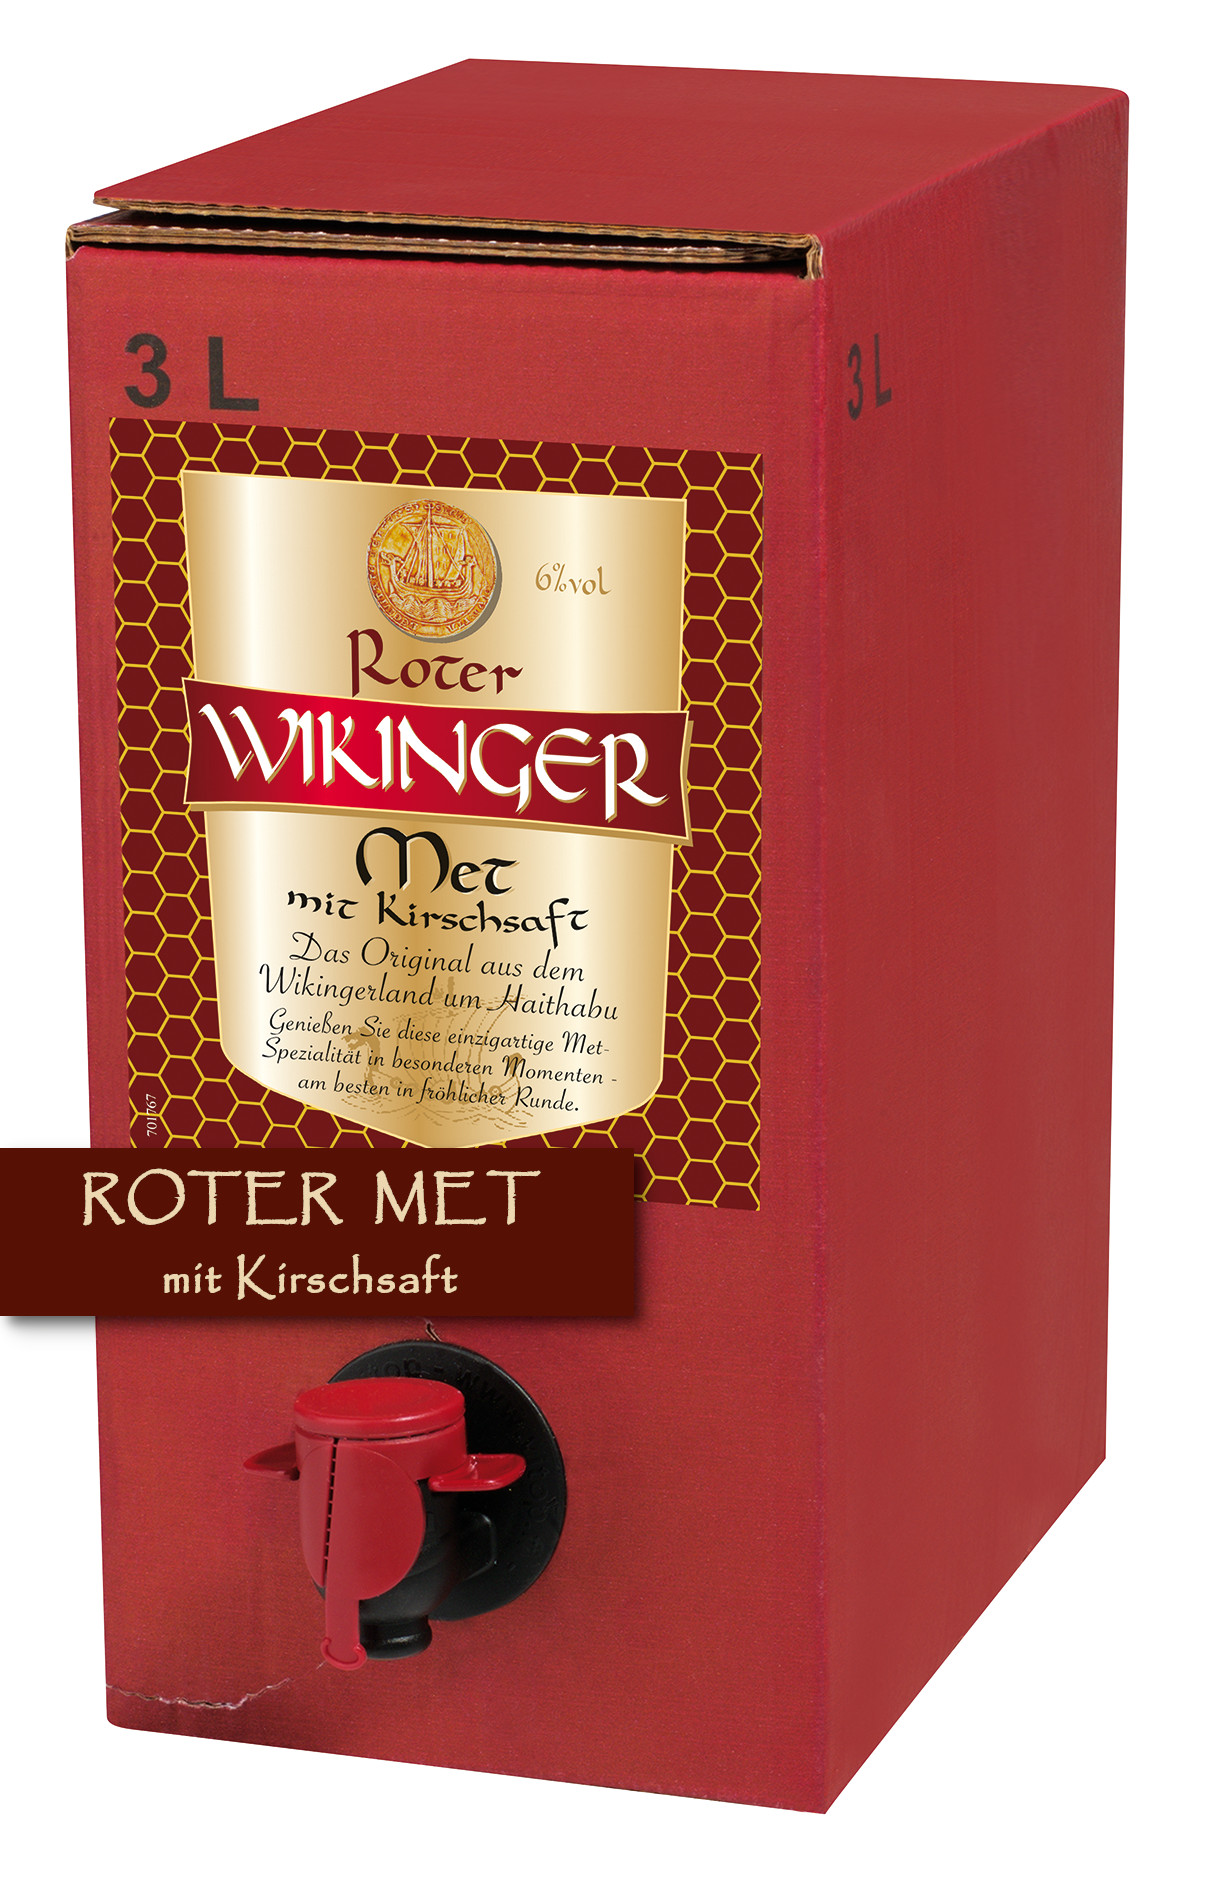 Roter Wikinger Met 3 Liter Bag-Box - 3L 6% vol